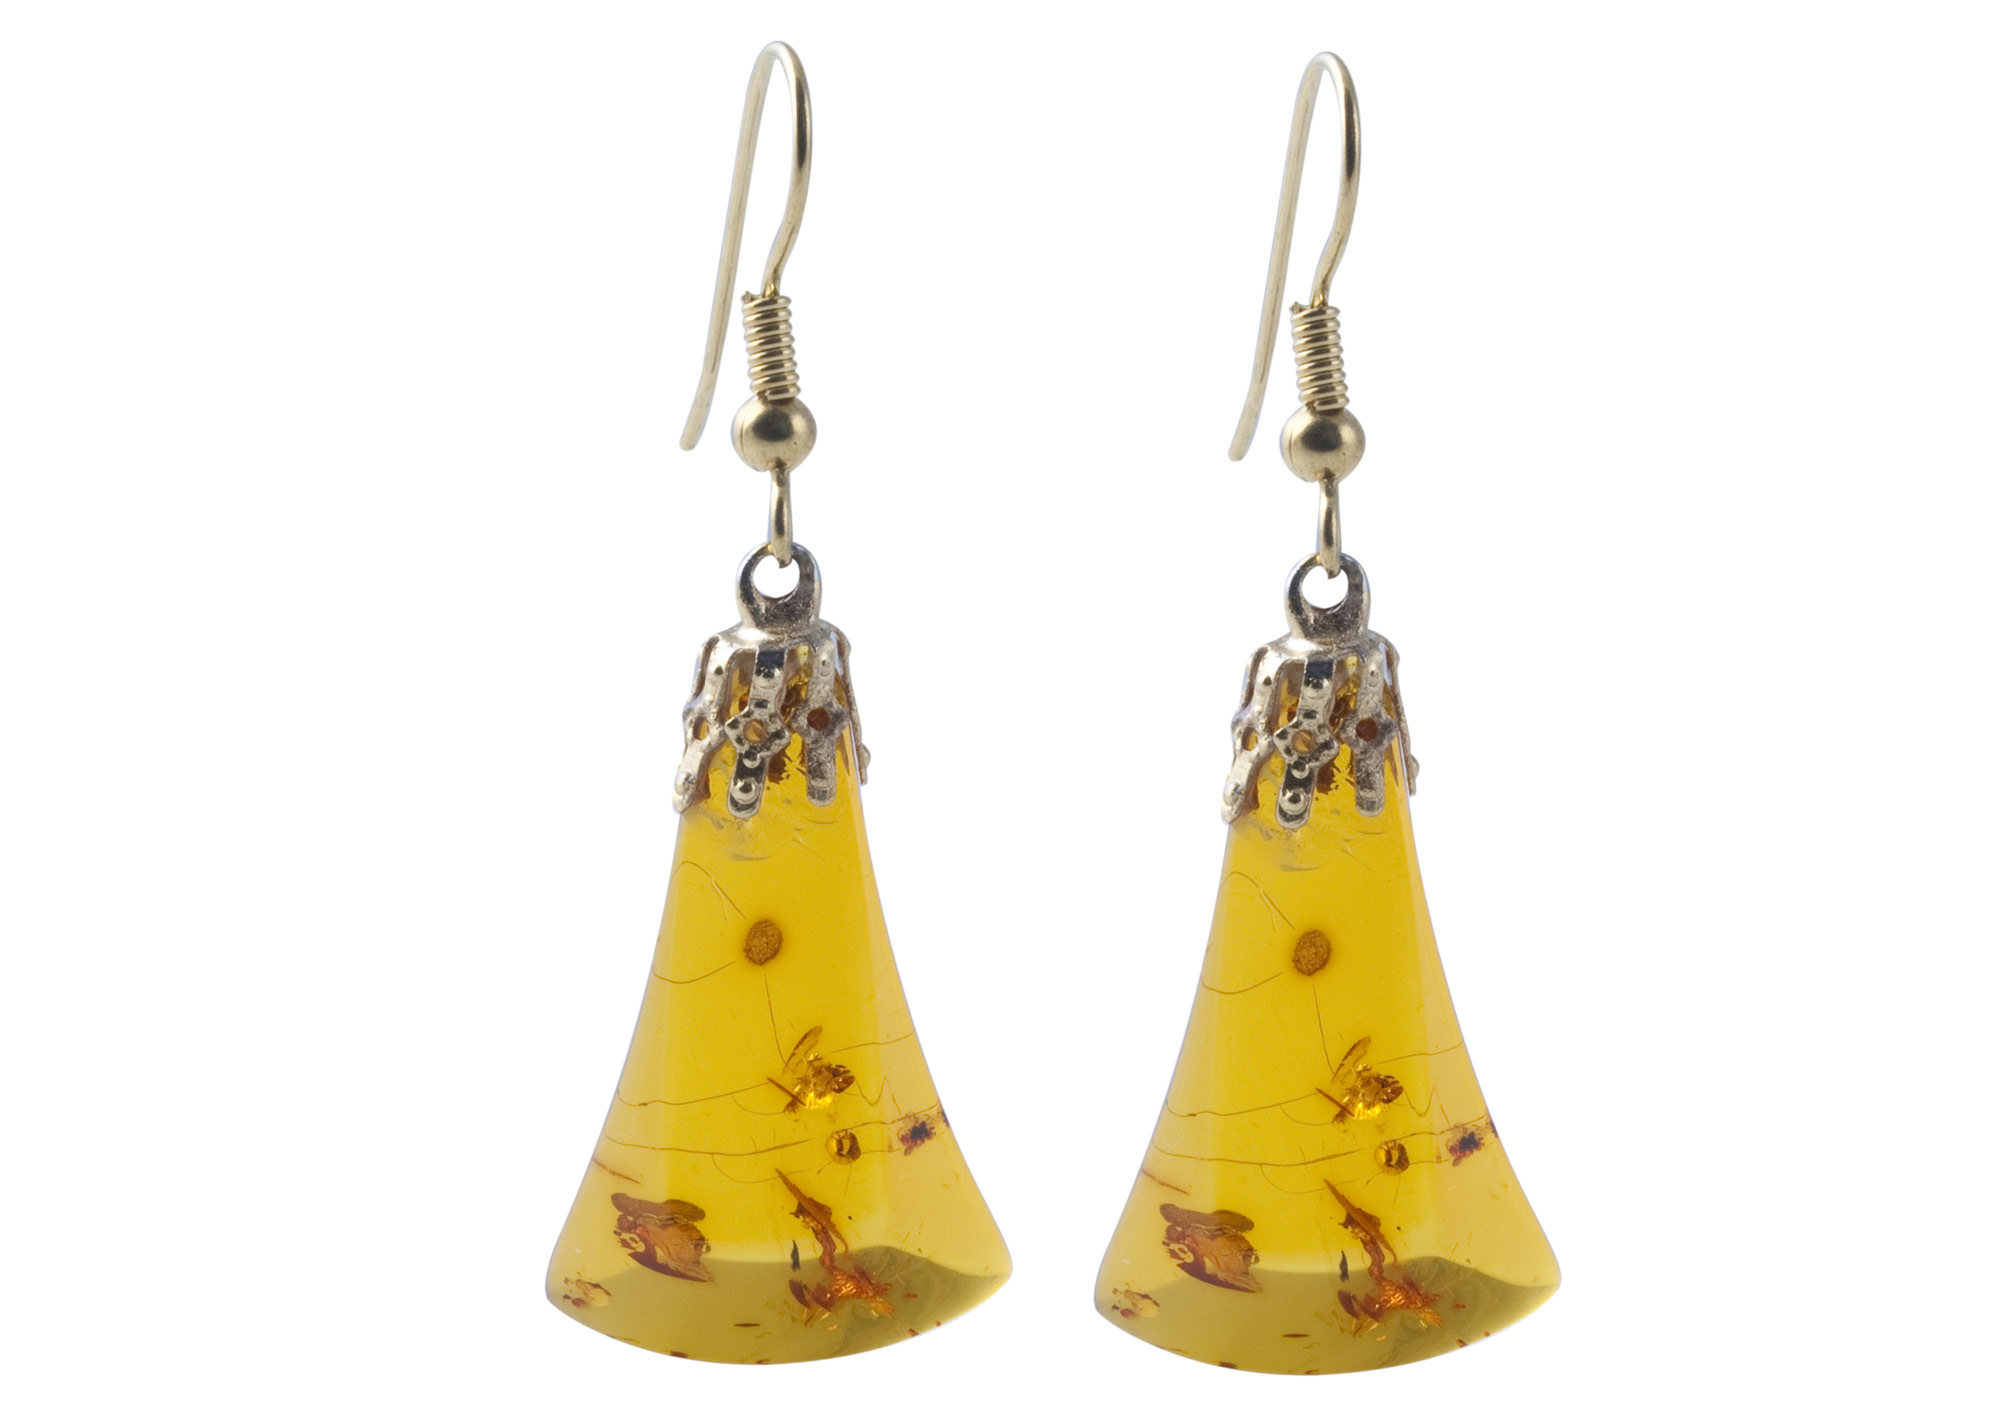 Buy Triangular Amber Earrings 1.75" at GoldenCockerel.com